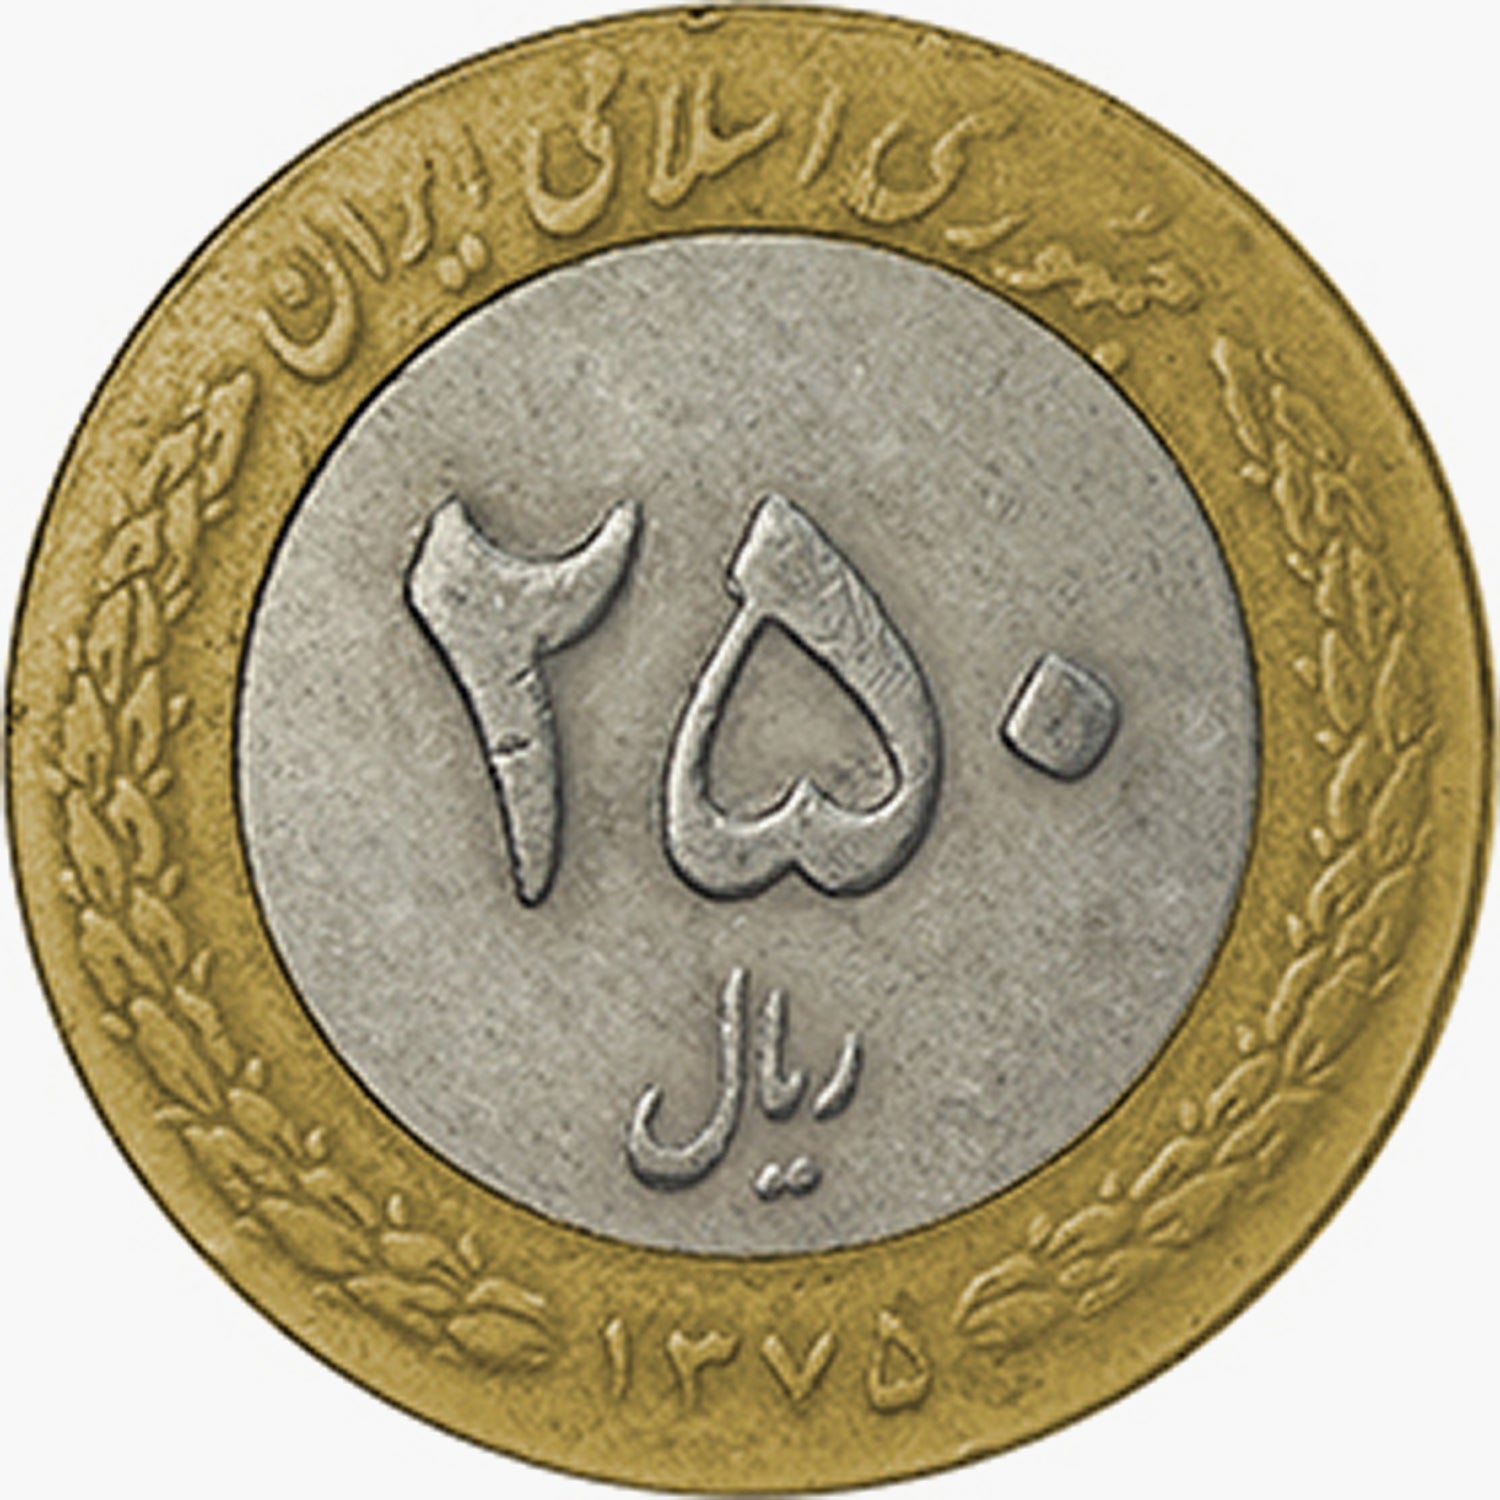 The Five - Bimetallic Coins